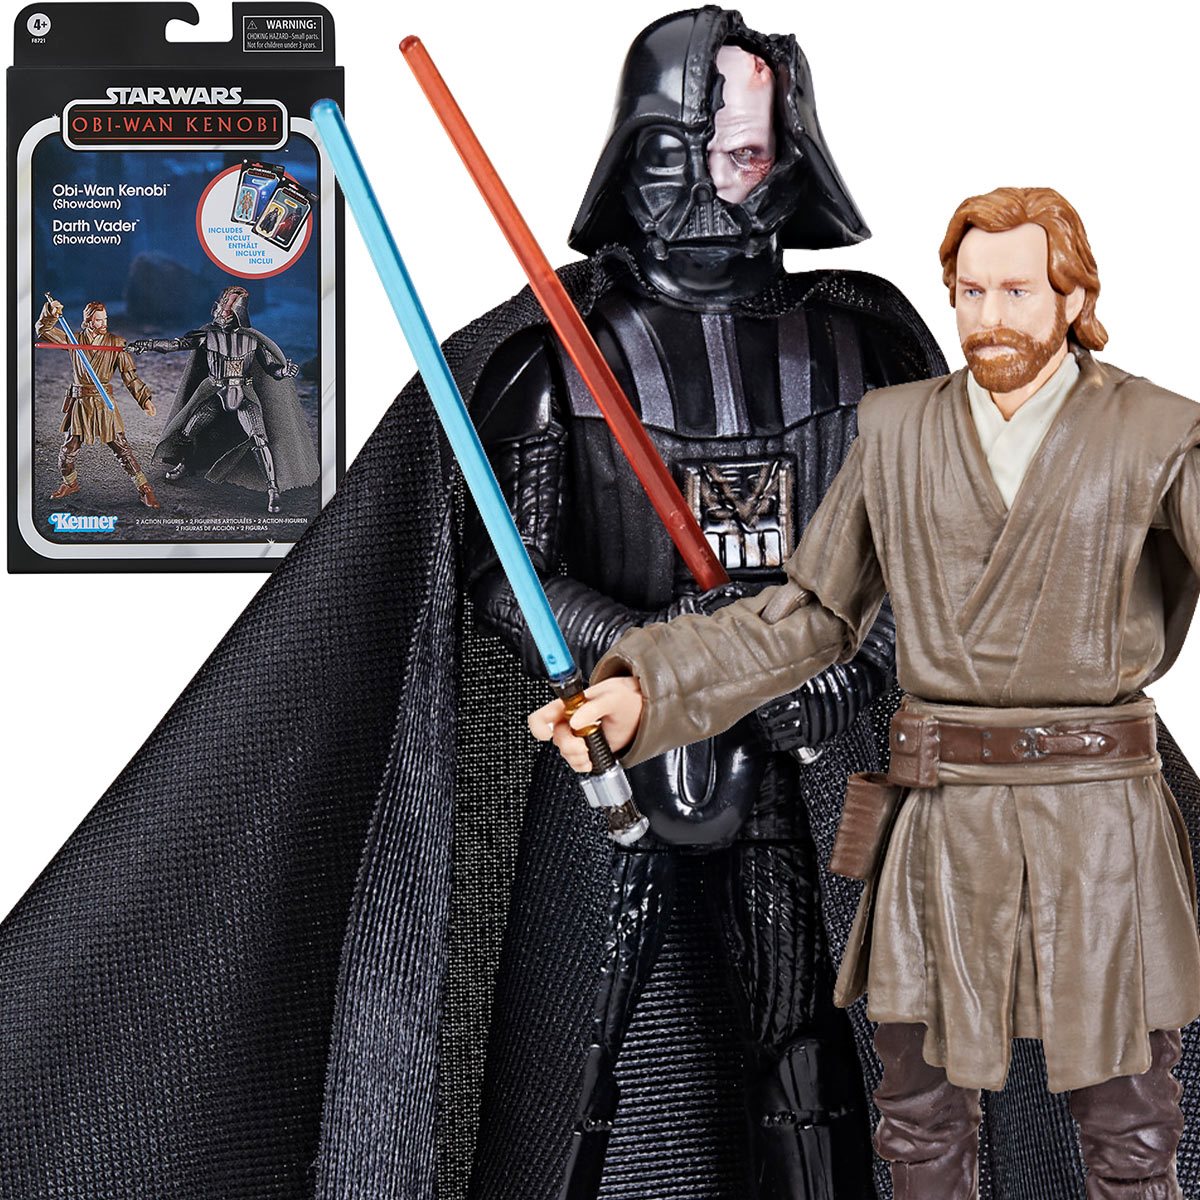 Star Wars: The Vintage Collection Obi-Wan Kenobi 2-Pack Hasbro